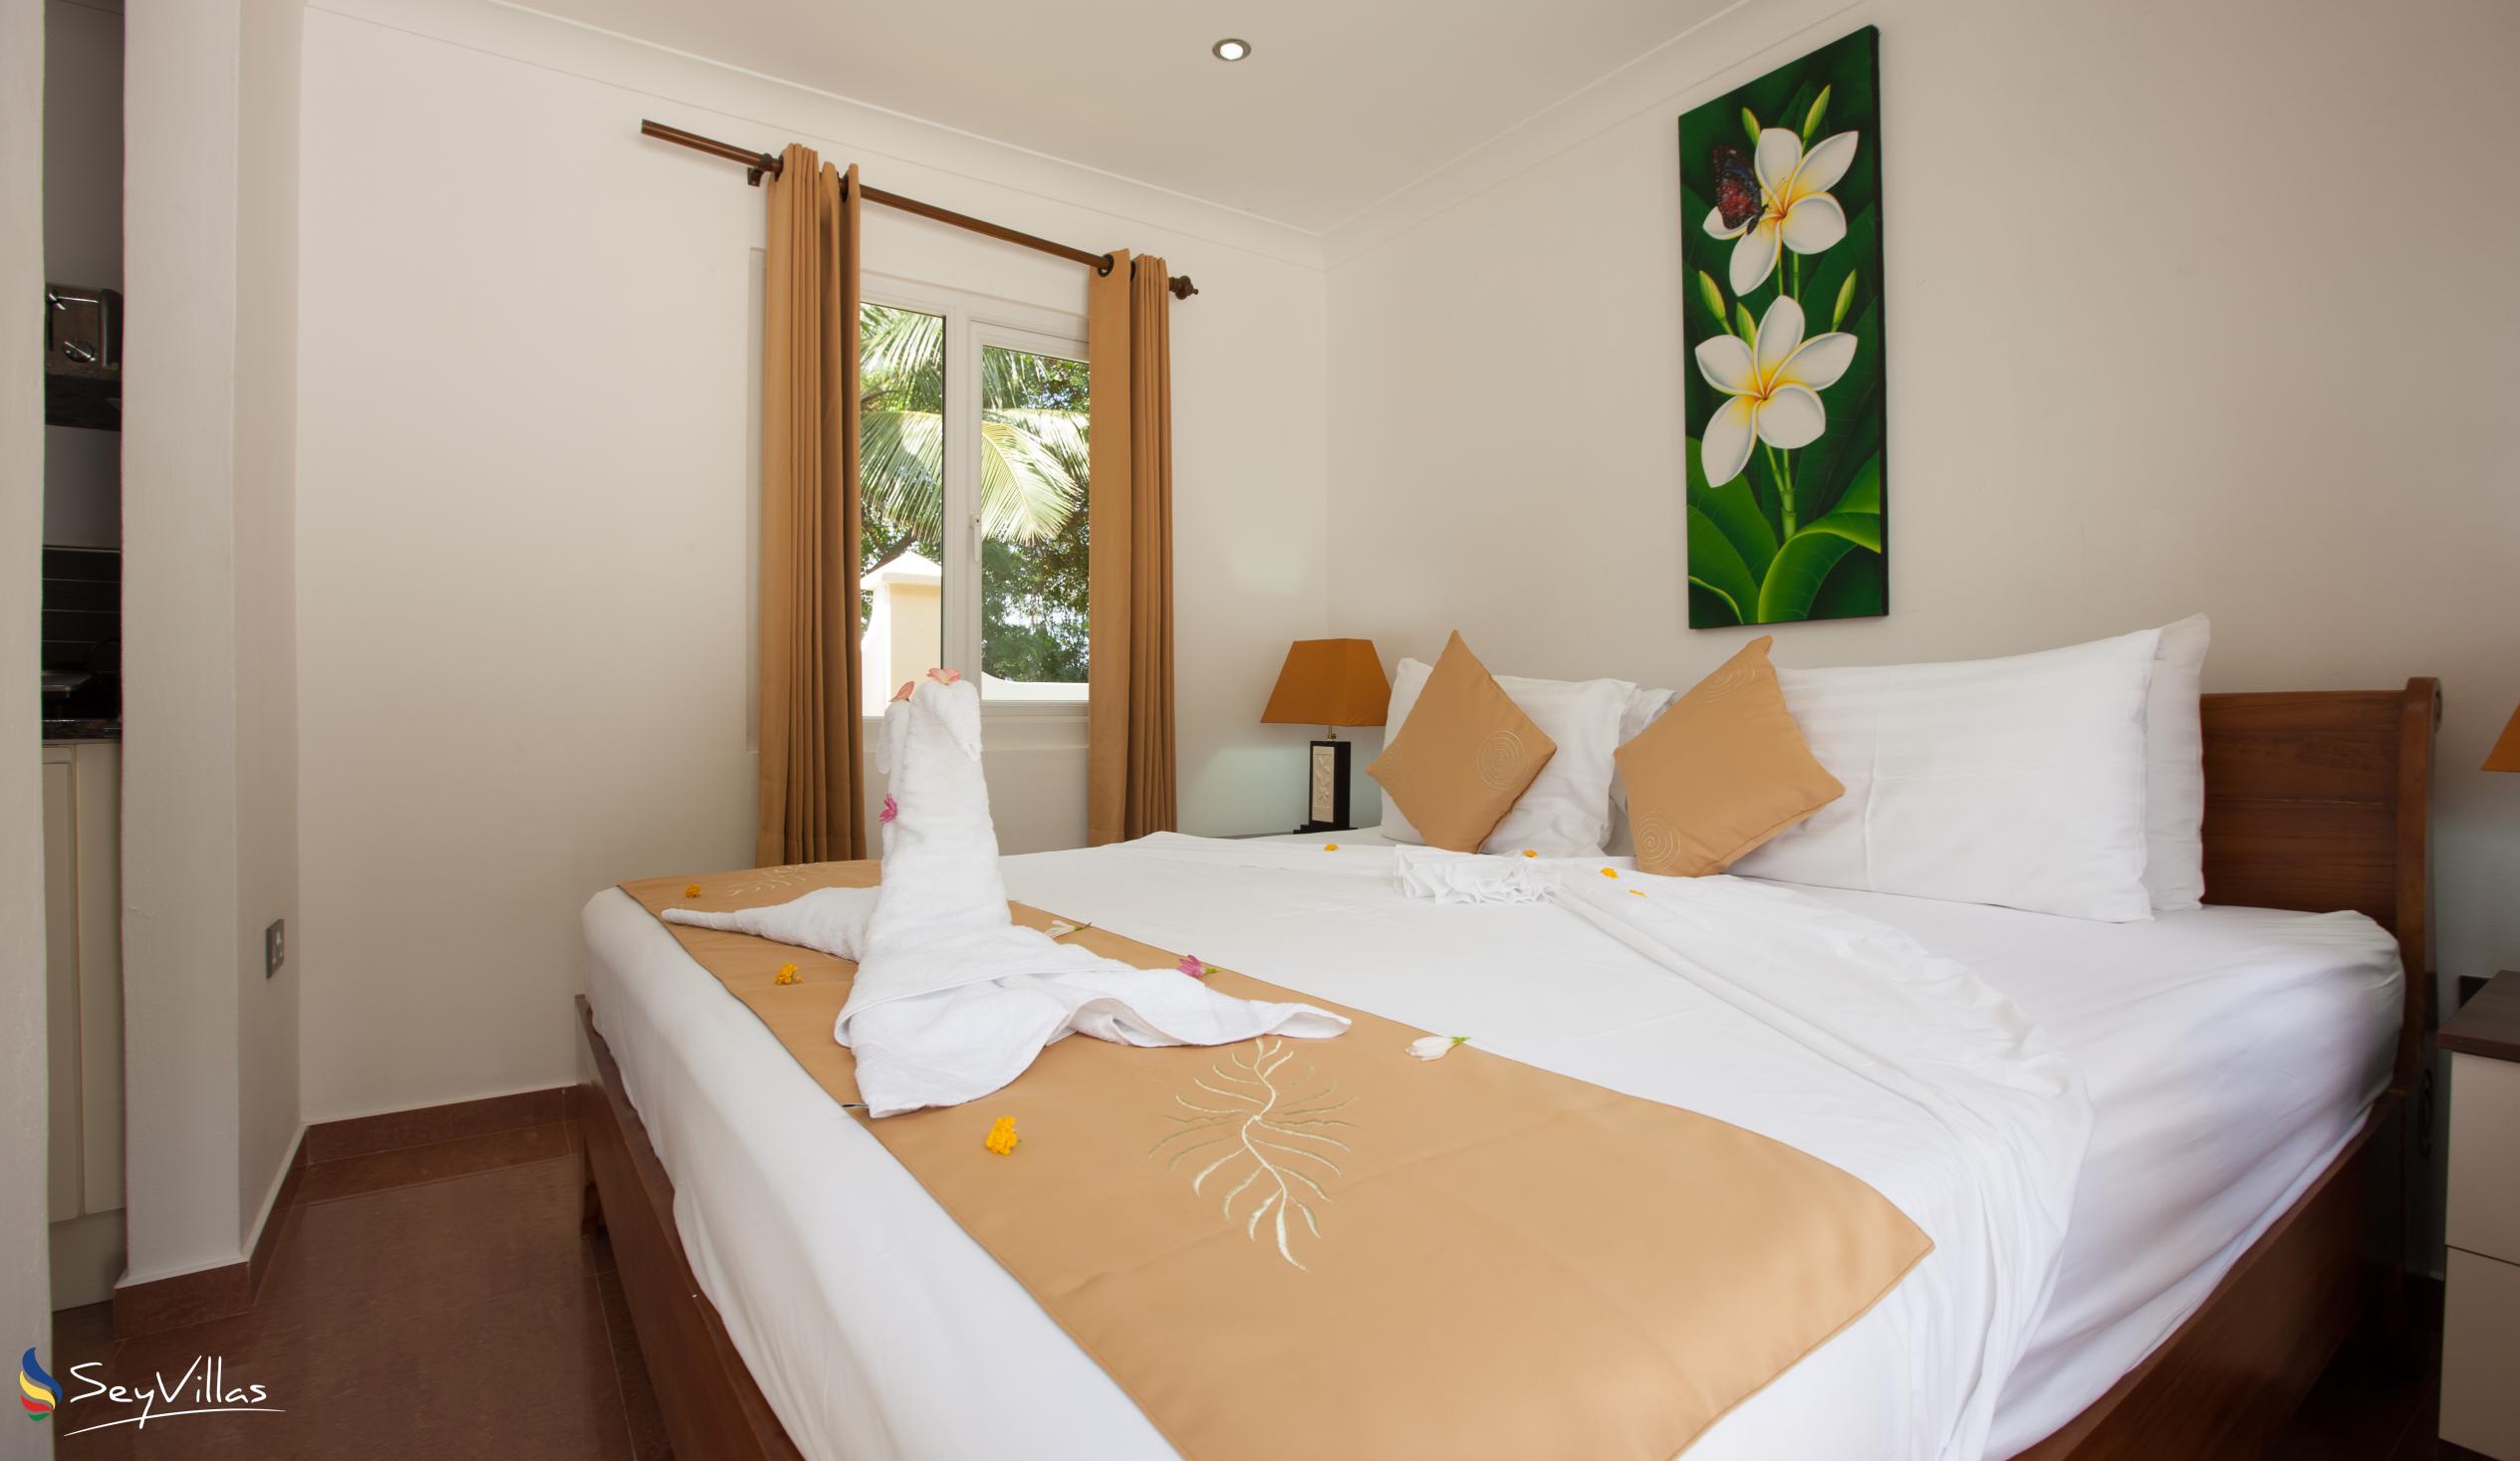 Photo 89: YASAD Luxury Beach Residence - 1-Bedroom Studio - Praslin (Seychelles)